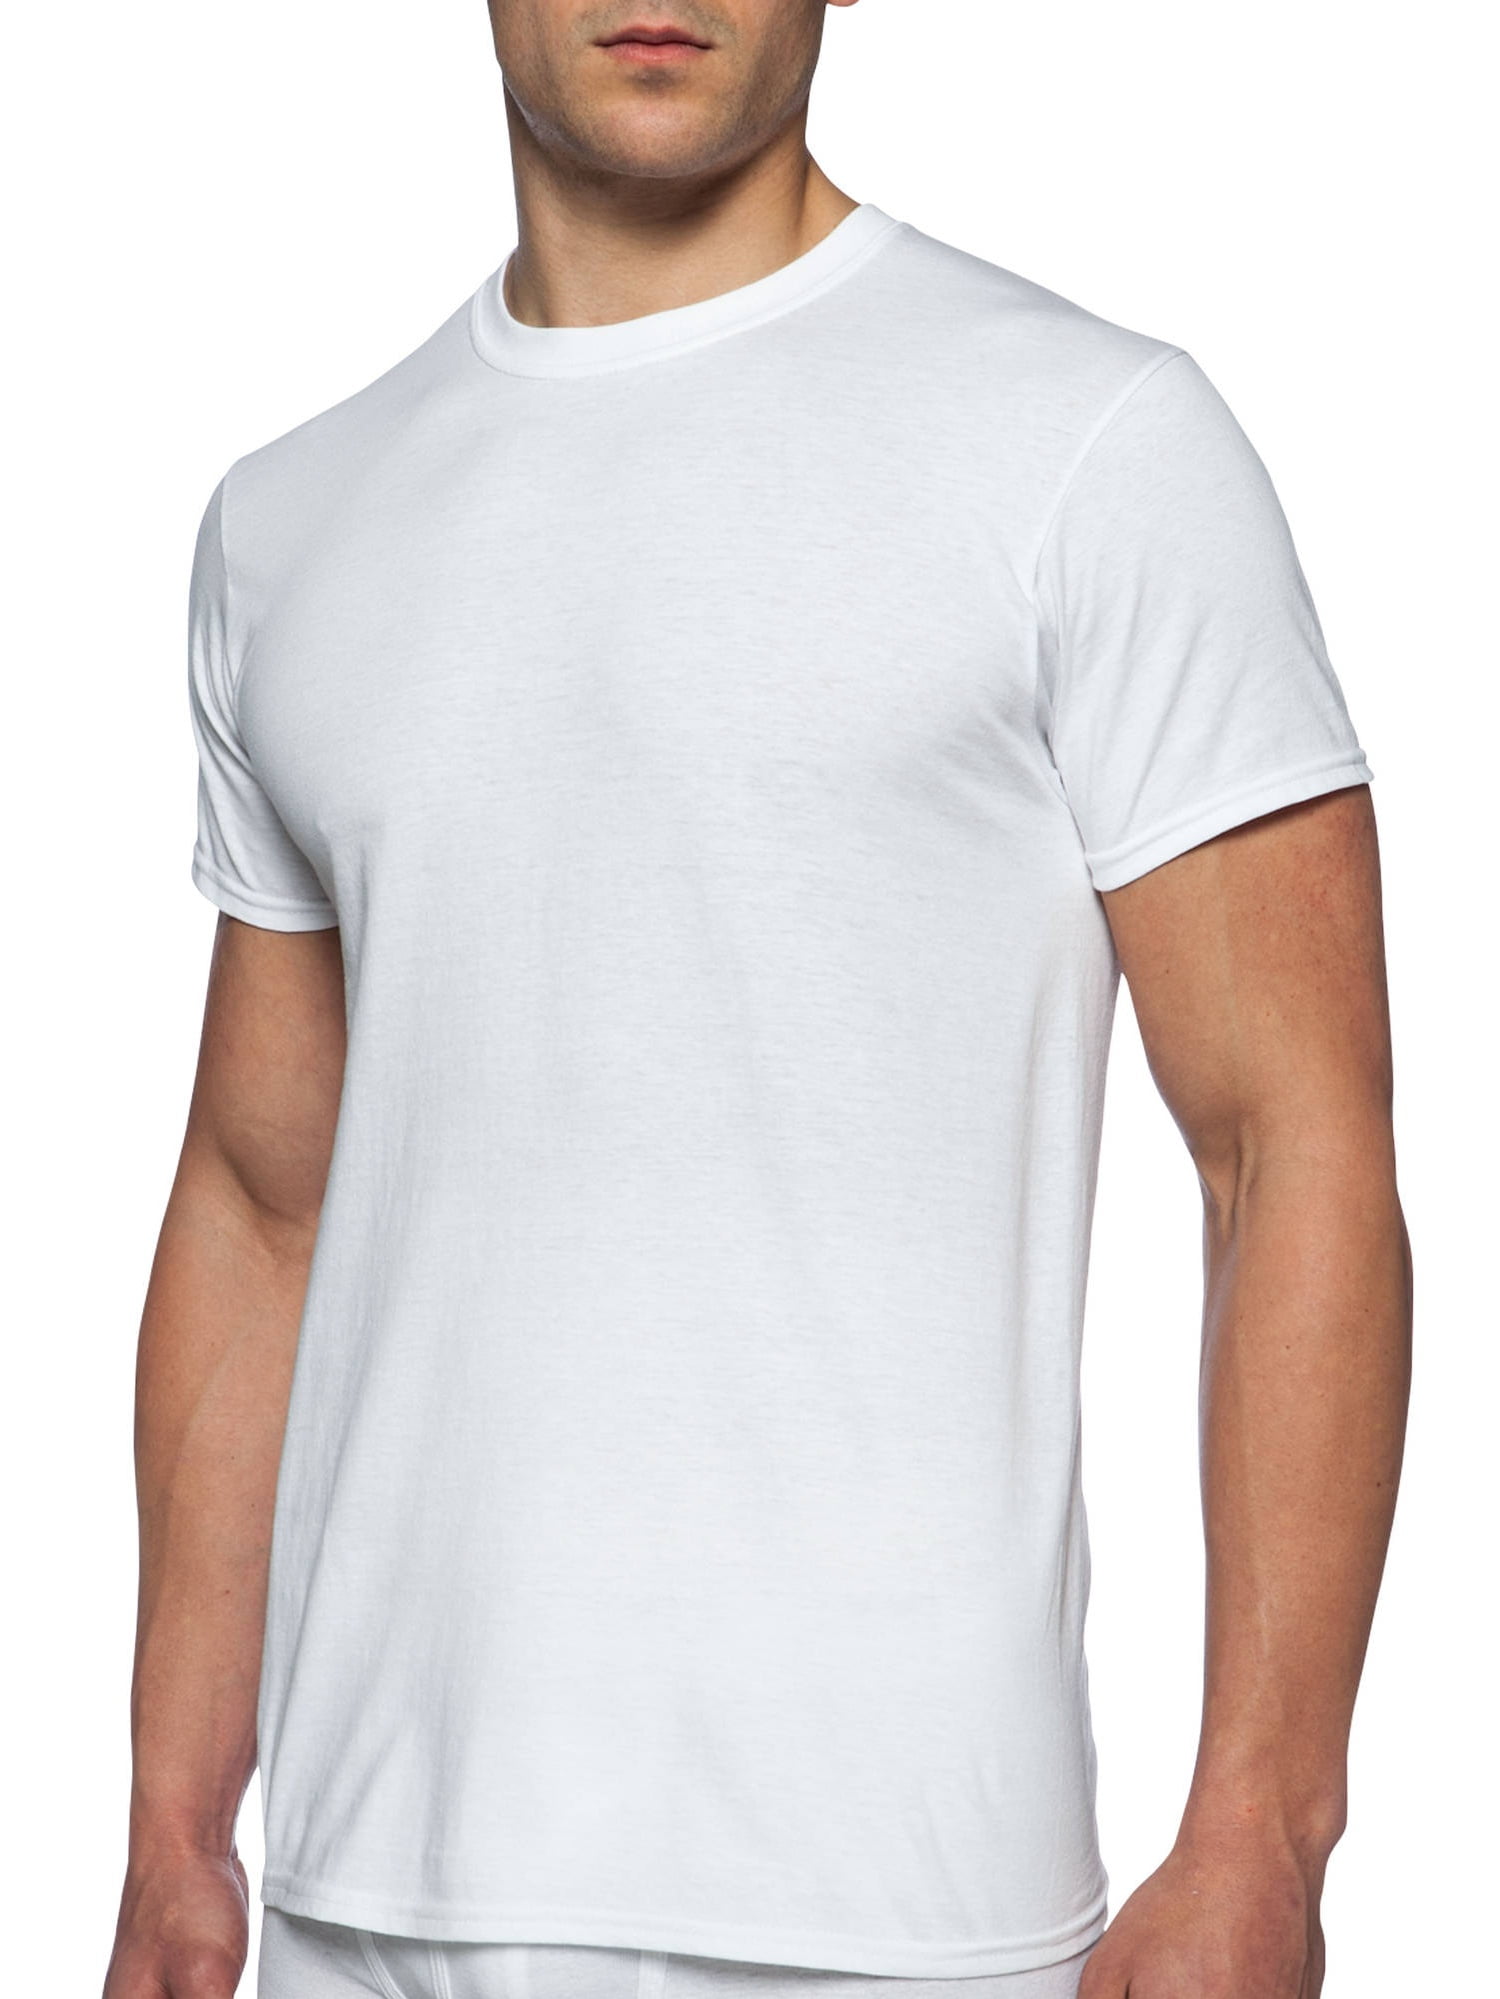 Big Men's Short Sleeve Crew White T-Shirt, 2 Pack, Size 2XL - Walmart.com